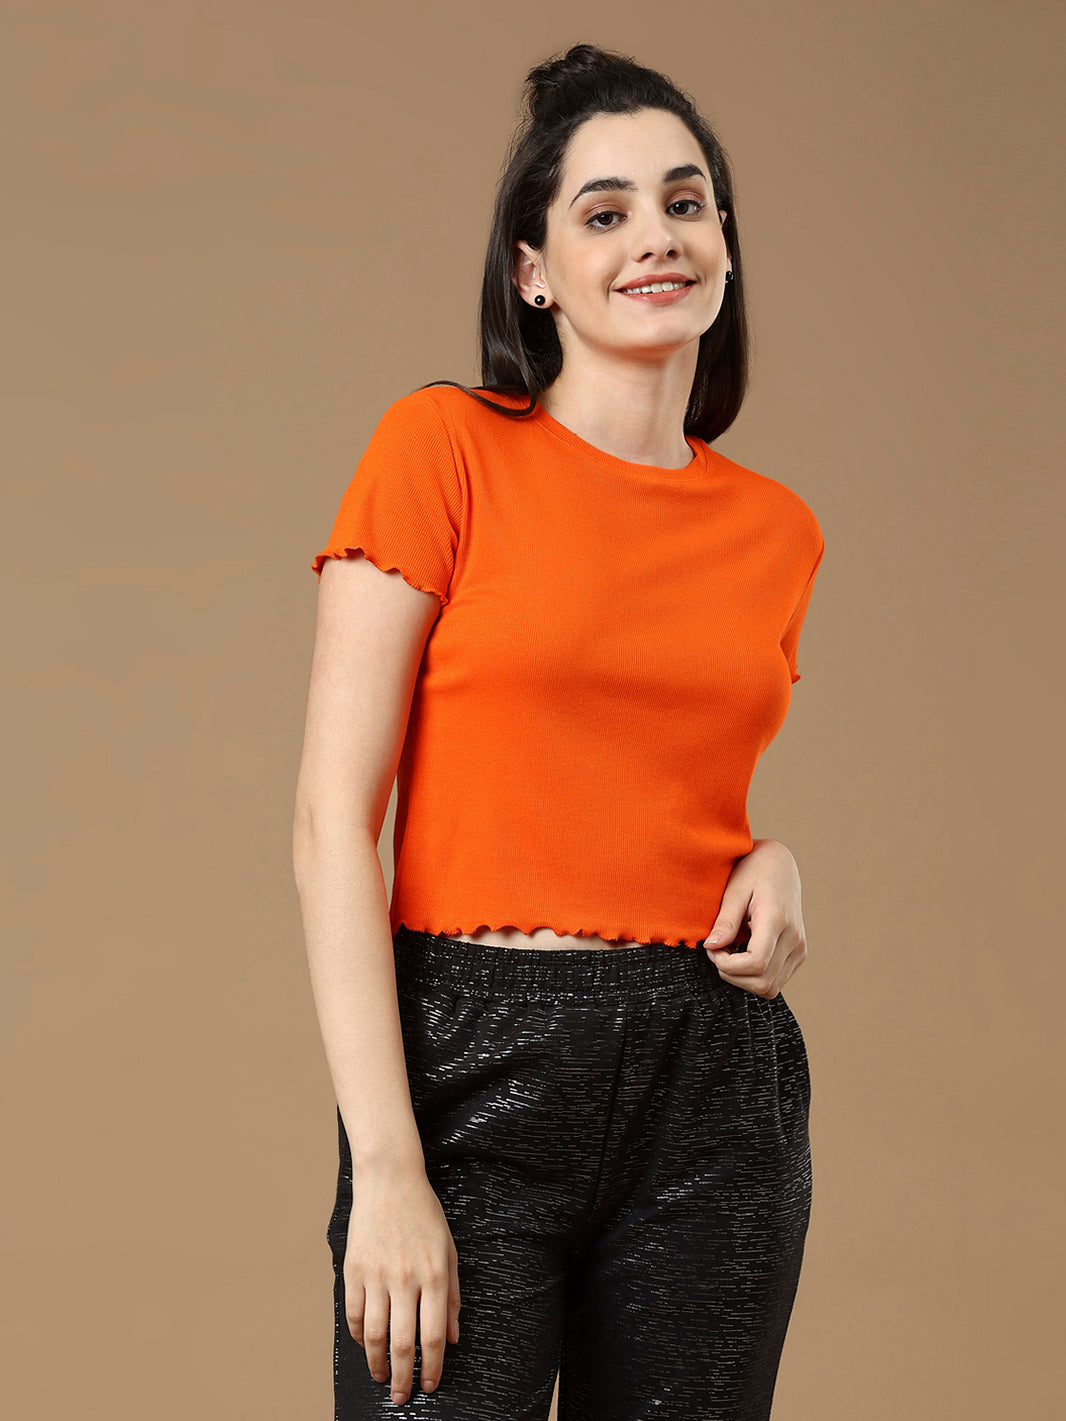 Women Orange Solid Half Sleeve Cotton Top